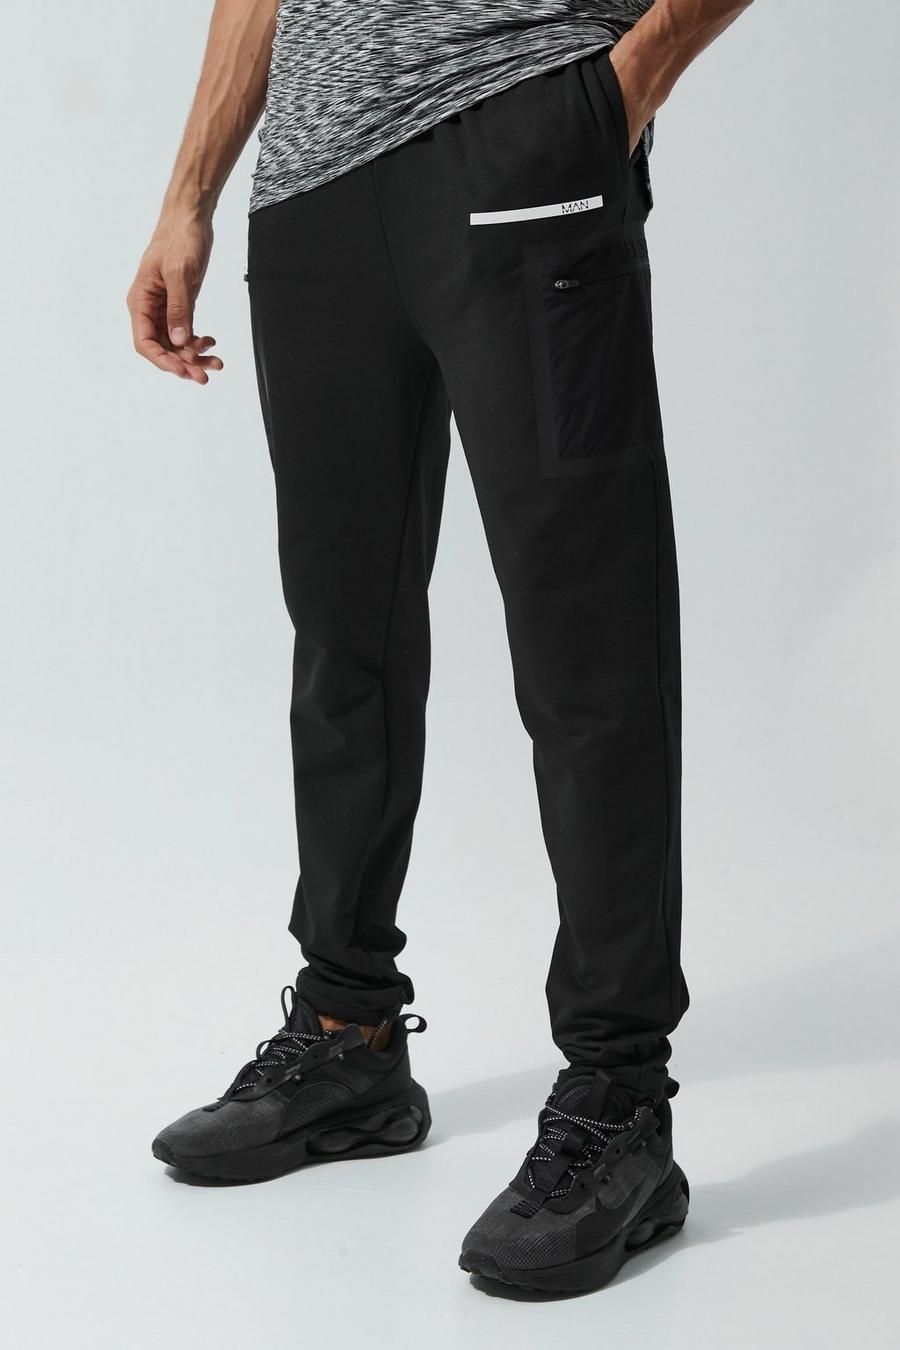 Pantaloni tuta Cargo Tall Man Active per alta performance, Black image number 1